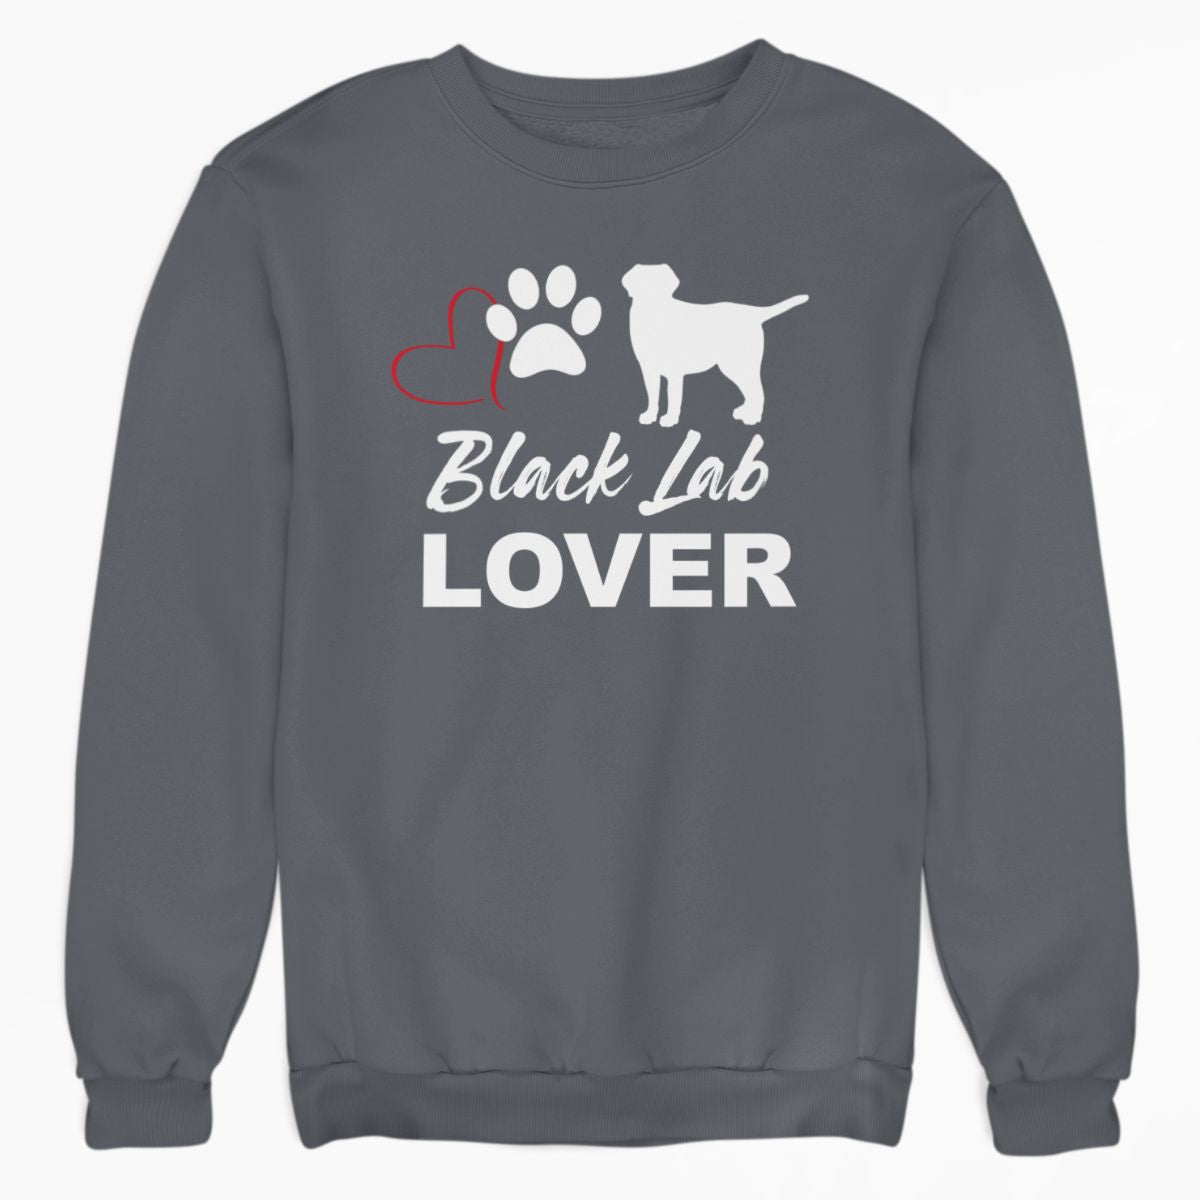 Black Lab Lover Shirt